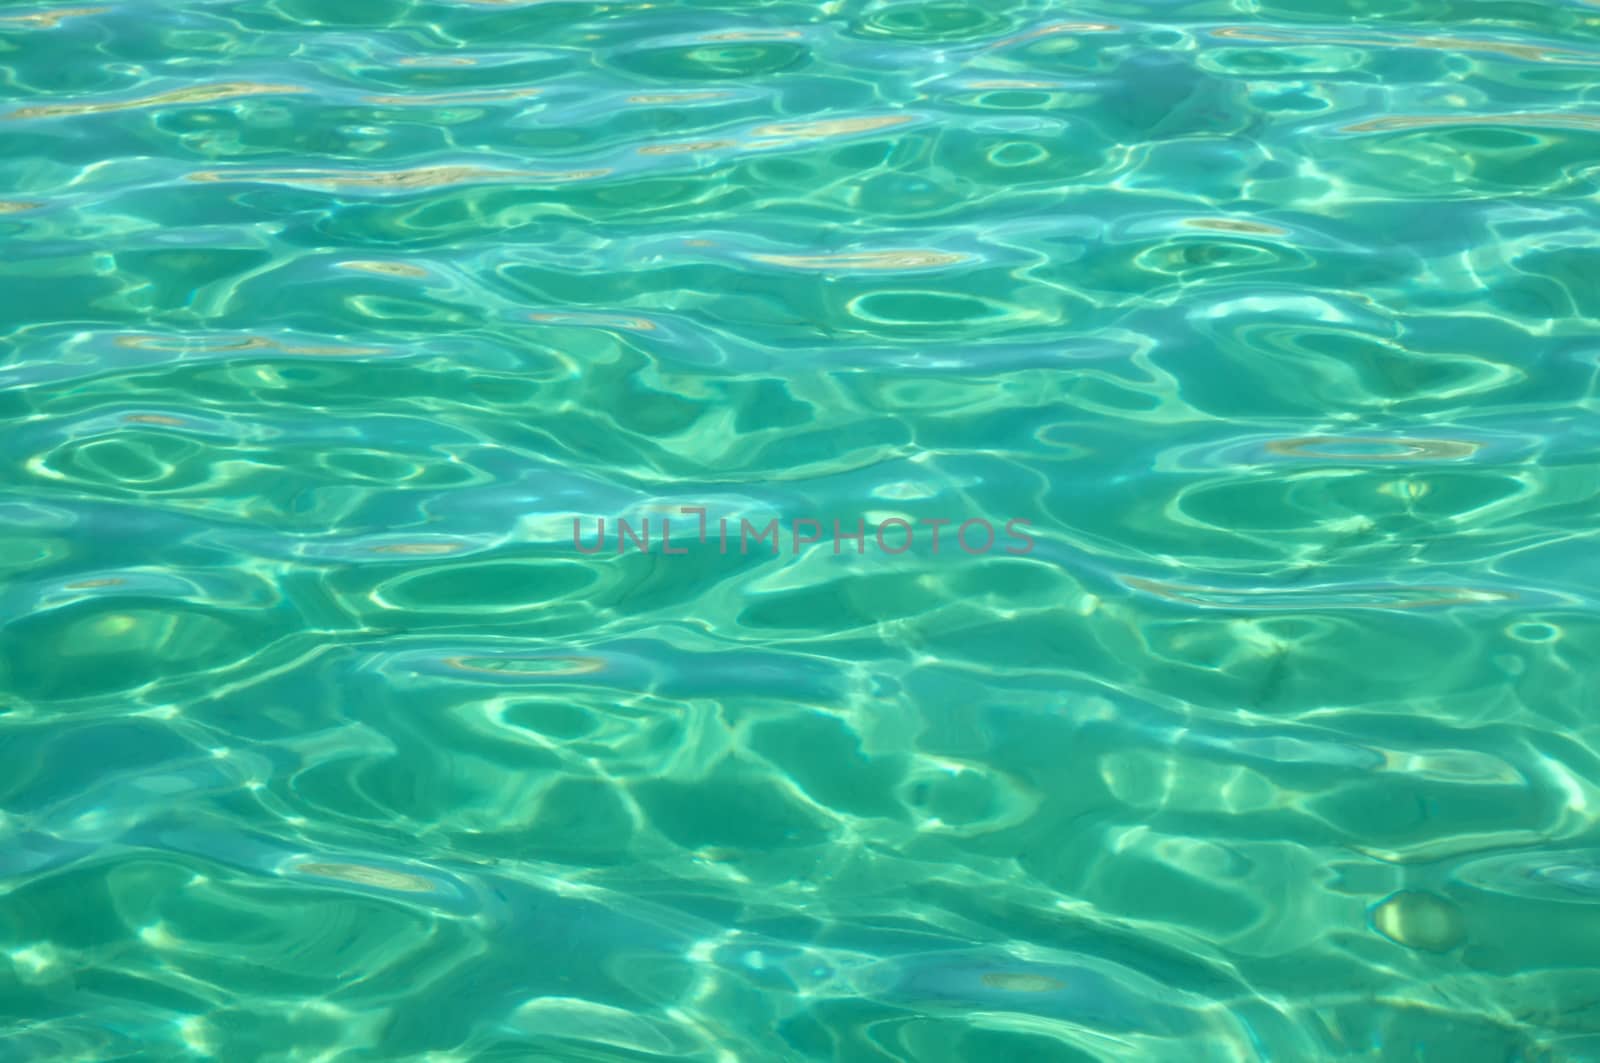 Water background, Aegean Sea by mitakag